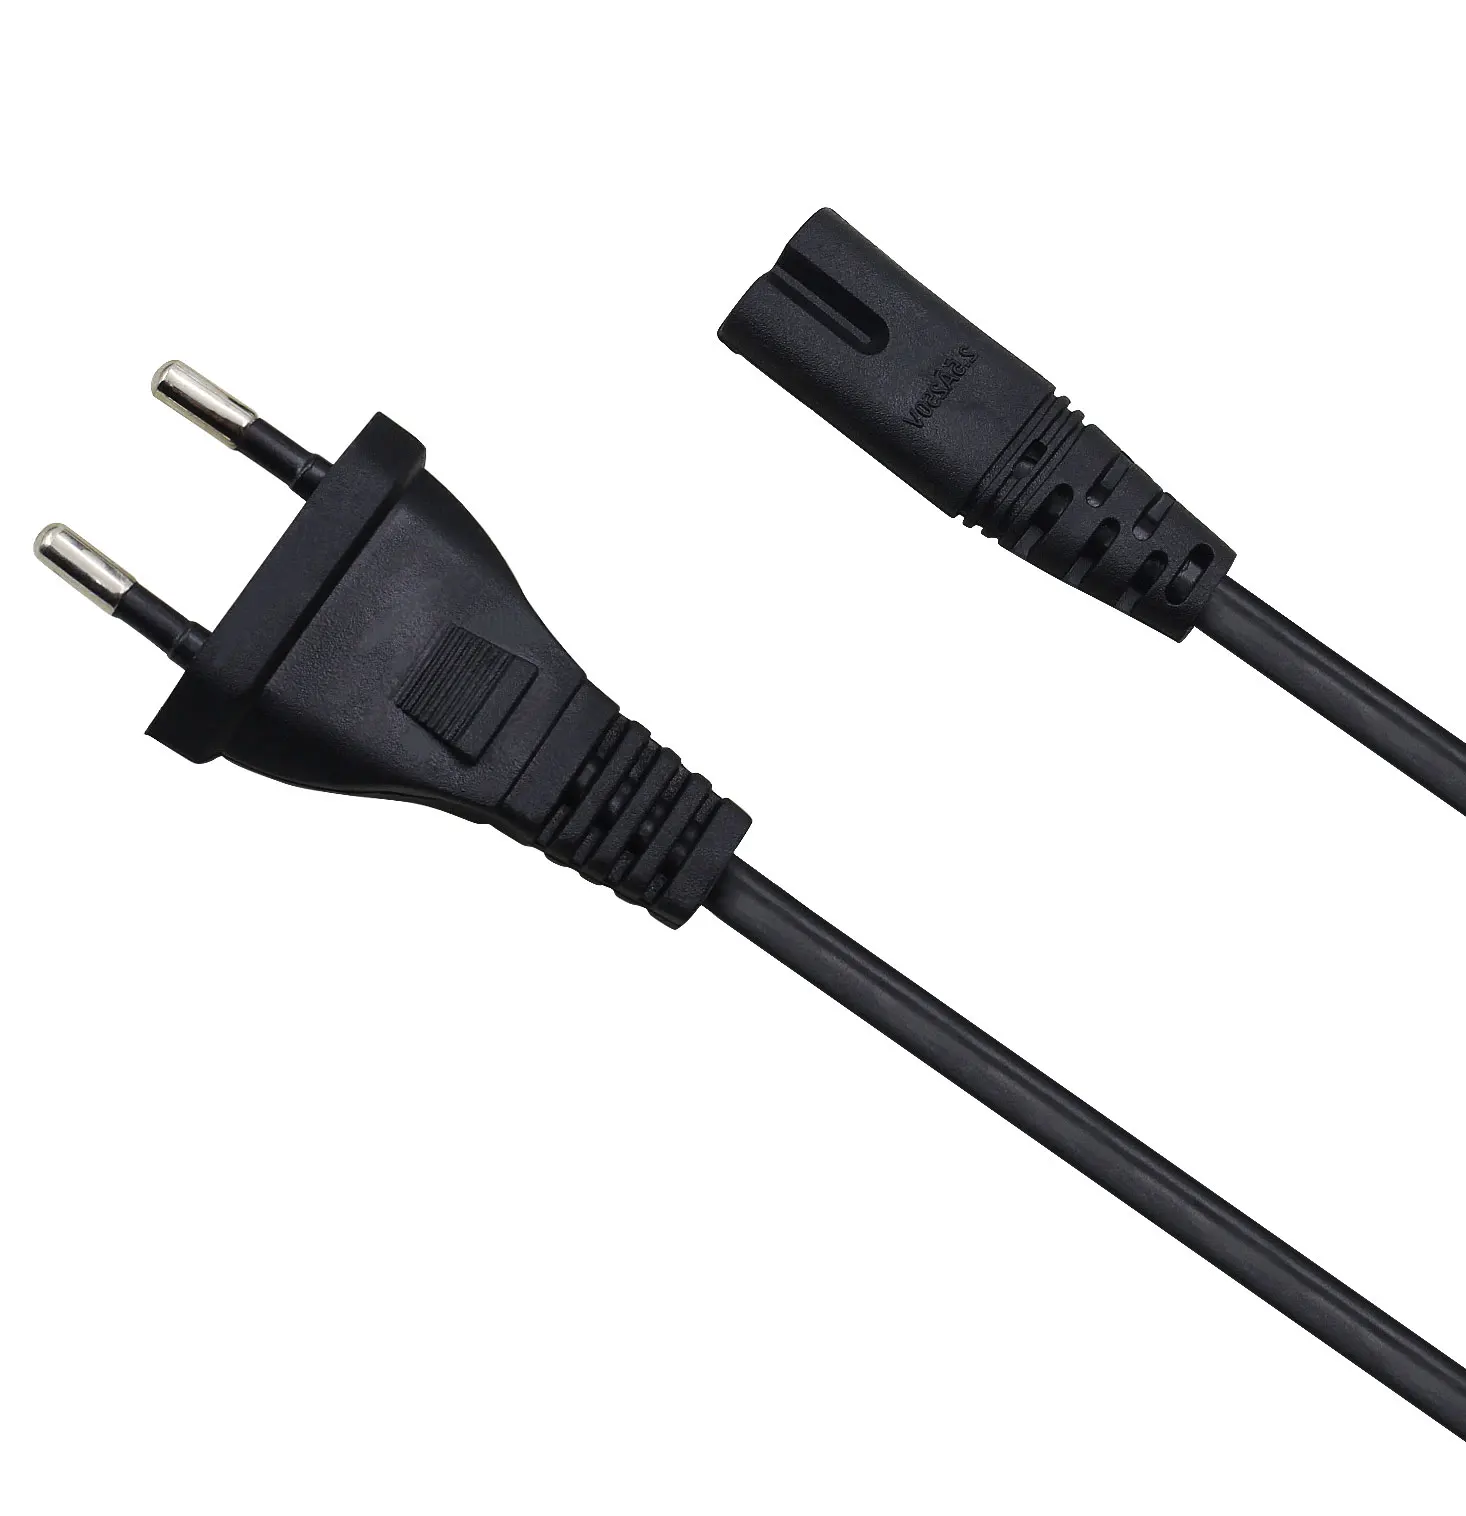 US AC 2 prong Power Cord Cable Lead For TECHNICS SA-AX730 SL-B100 SL-B200 